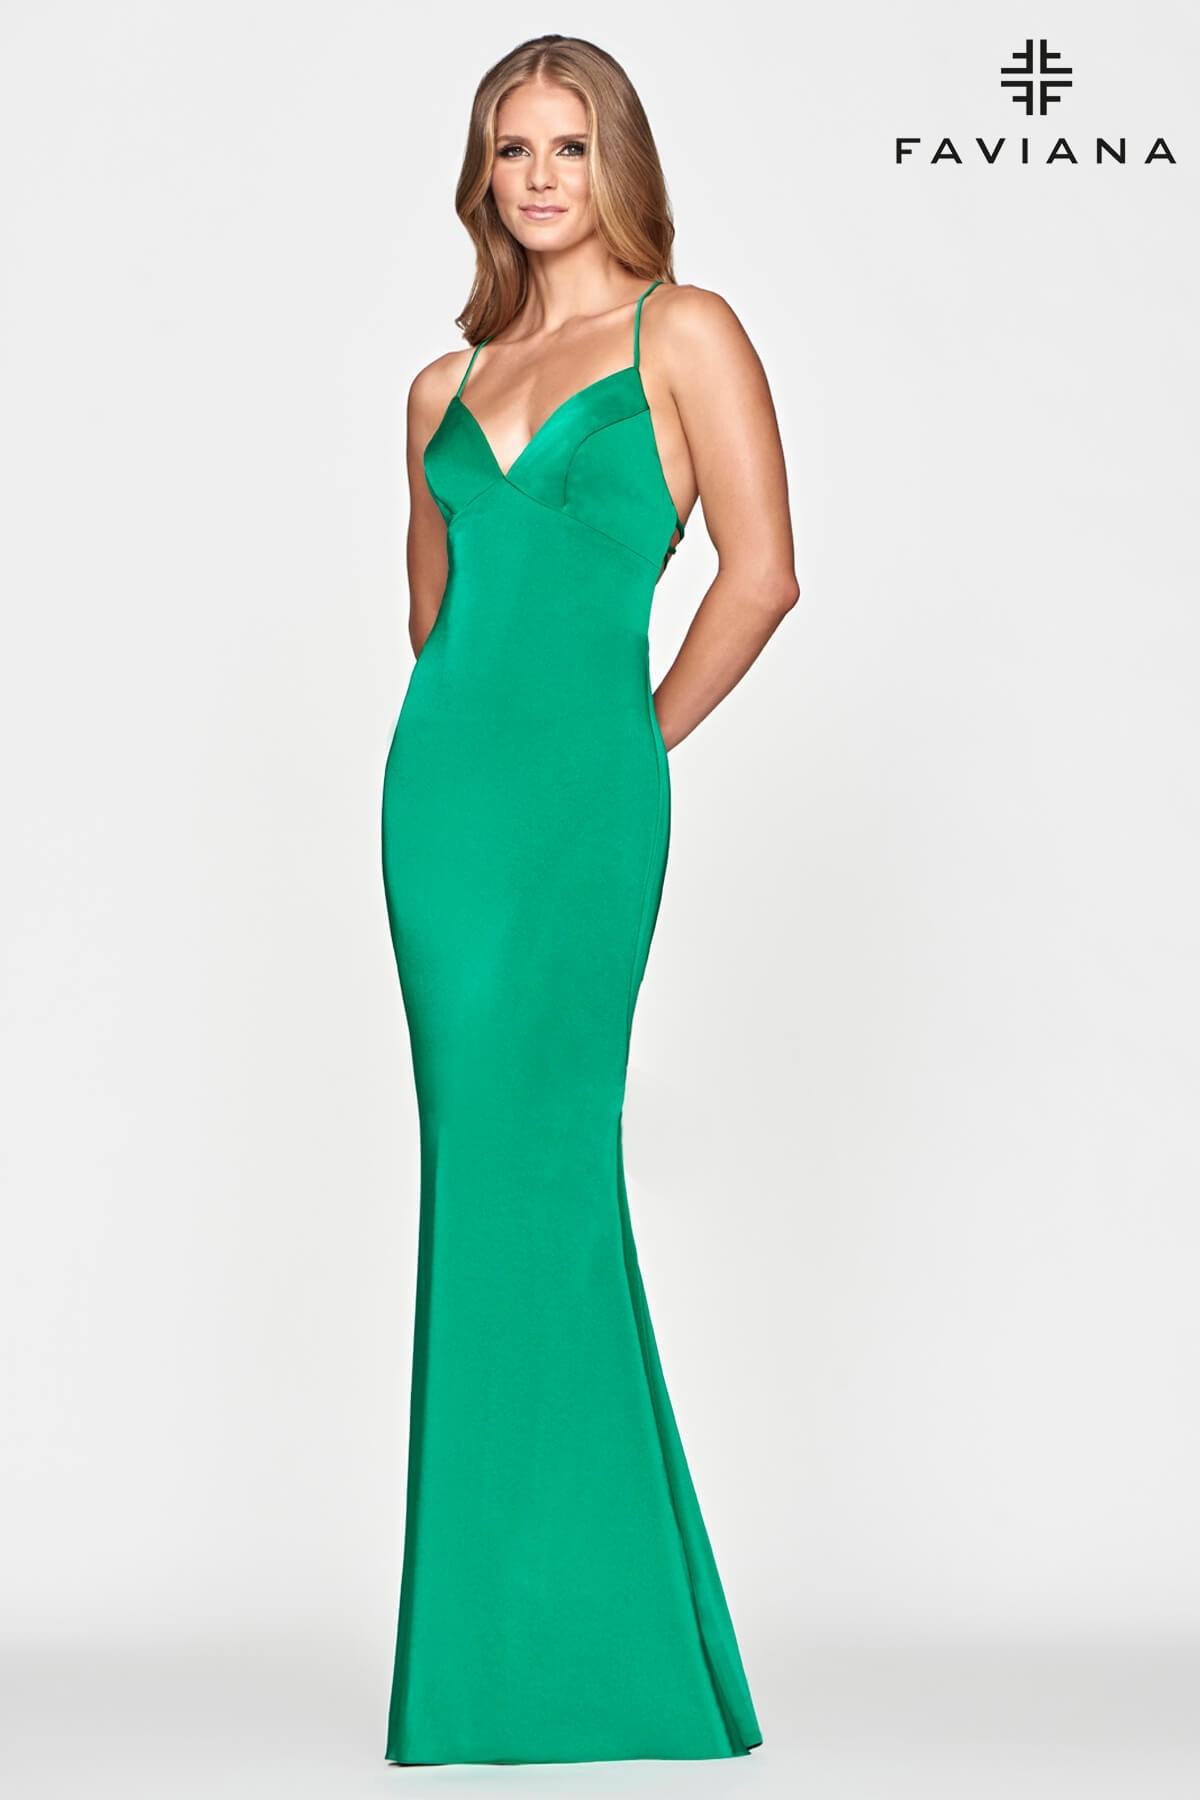 Faviana S10661 Prom Dress